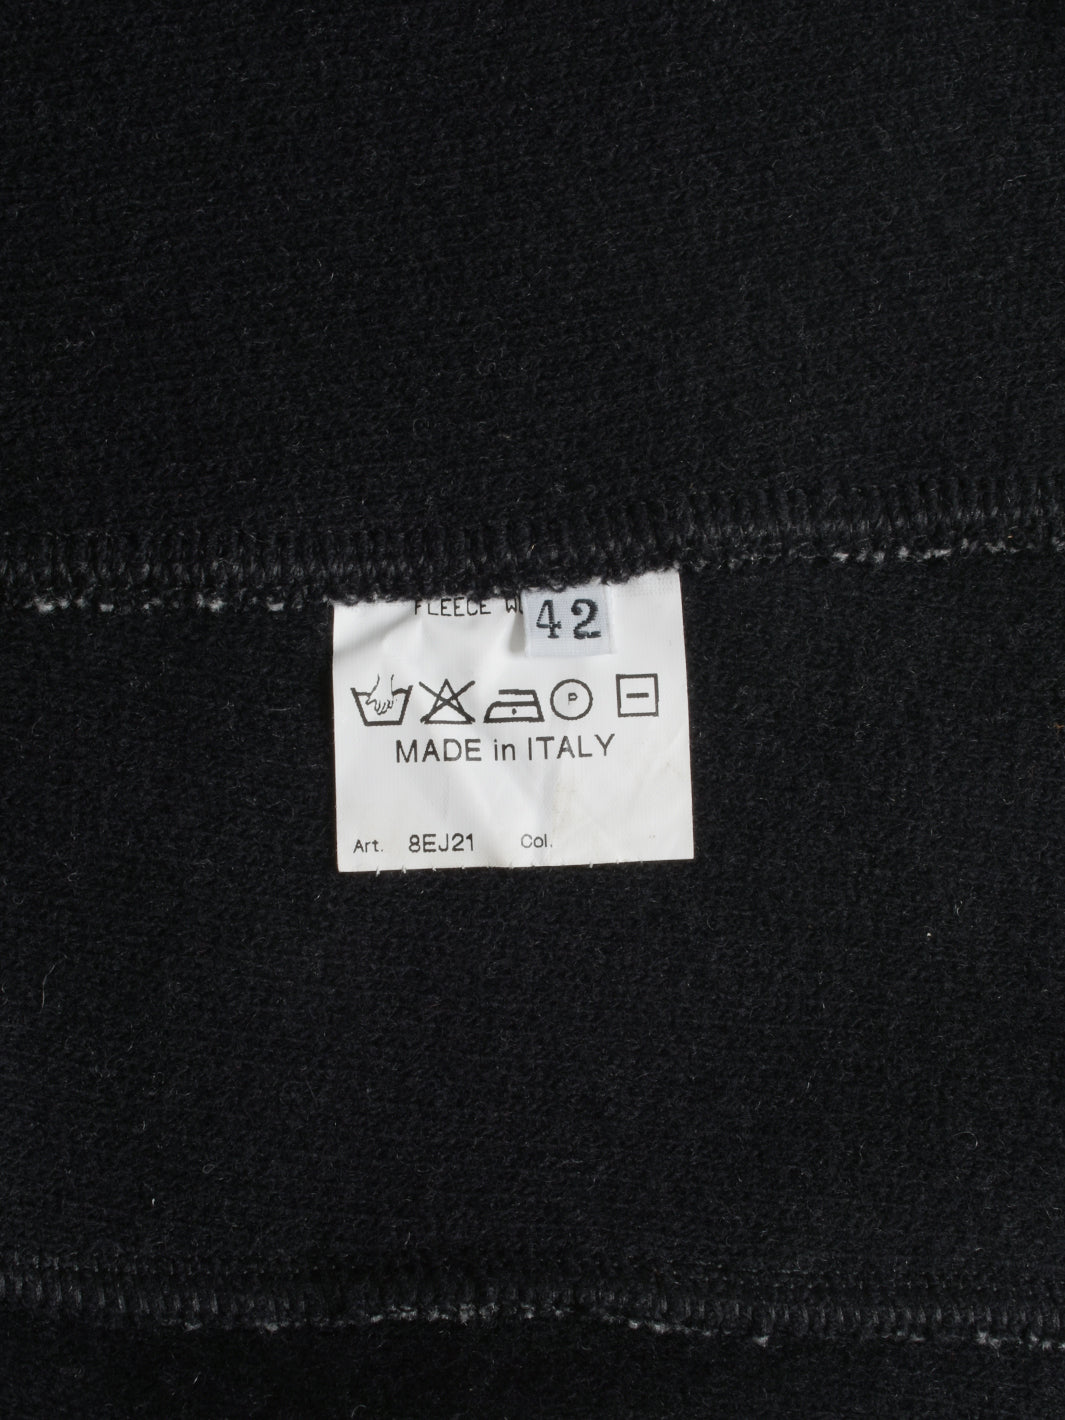 Vintage Wool Checks Jacket